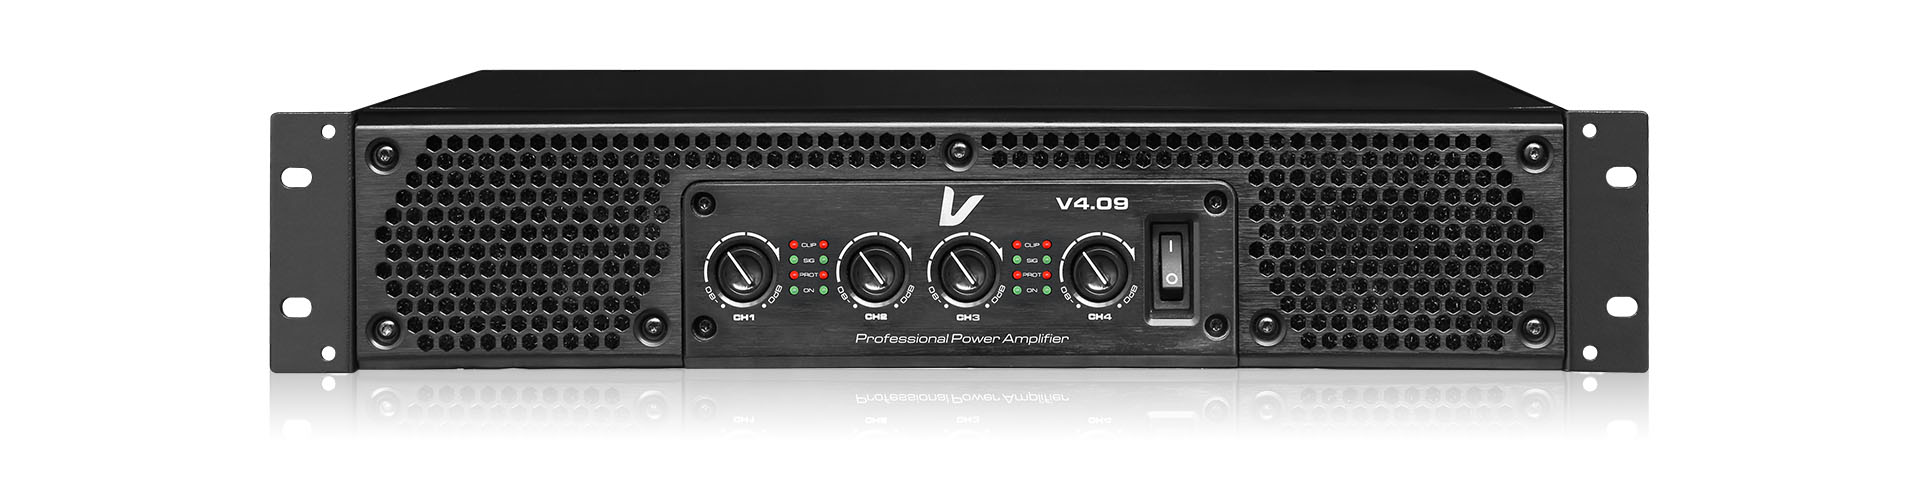 V4.25 power amplifier